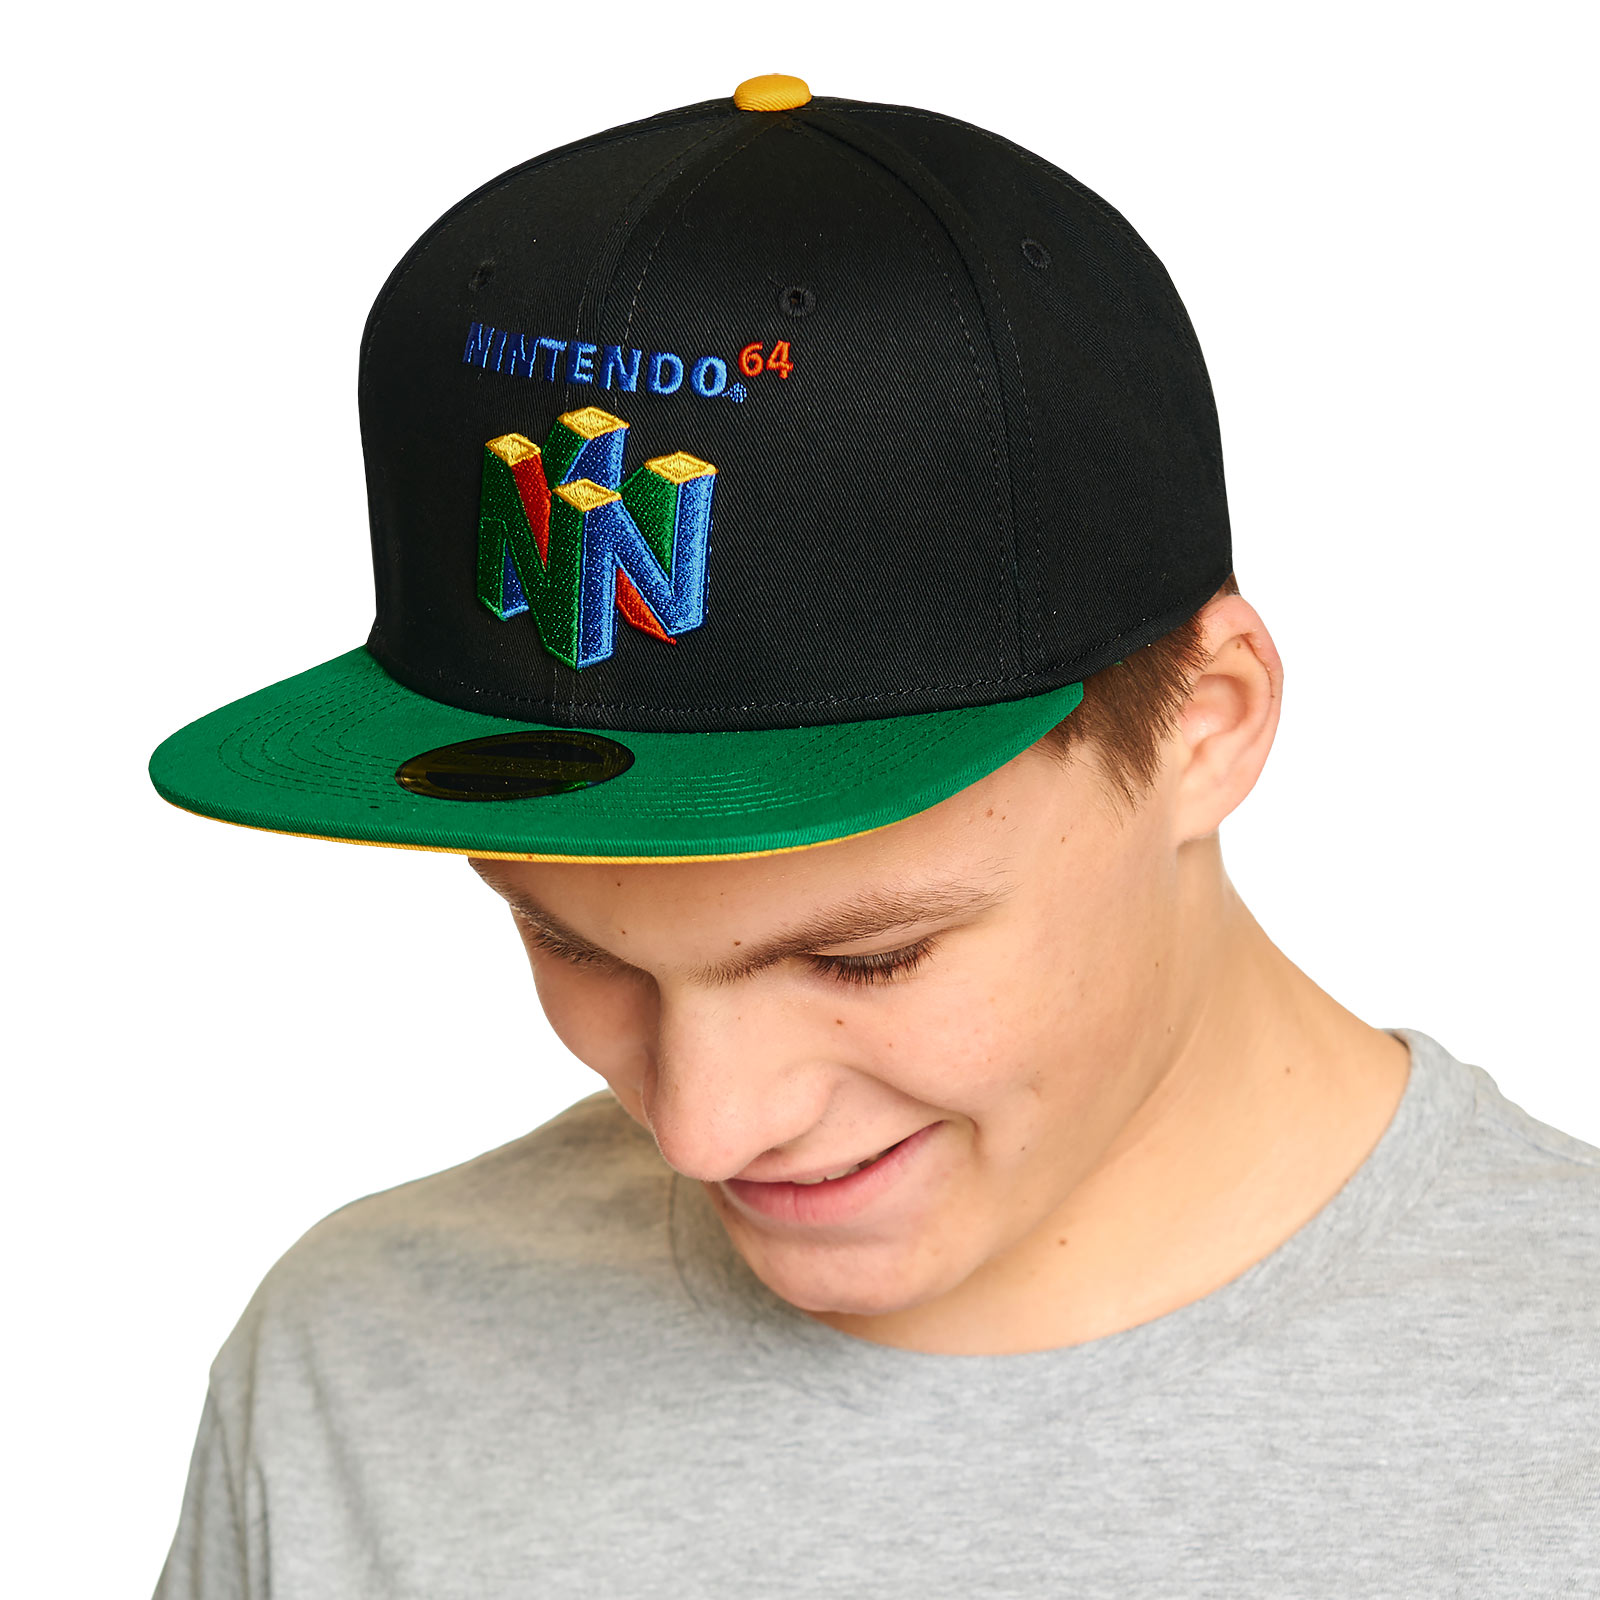 Nintendo - N64 Logo Snapback Cap